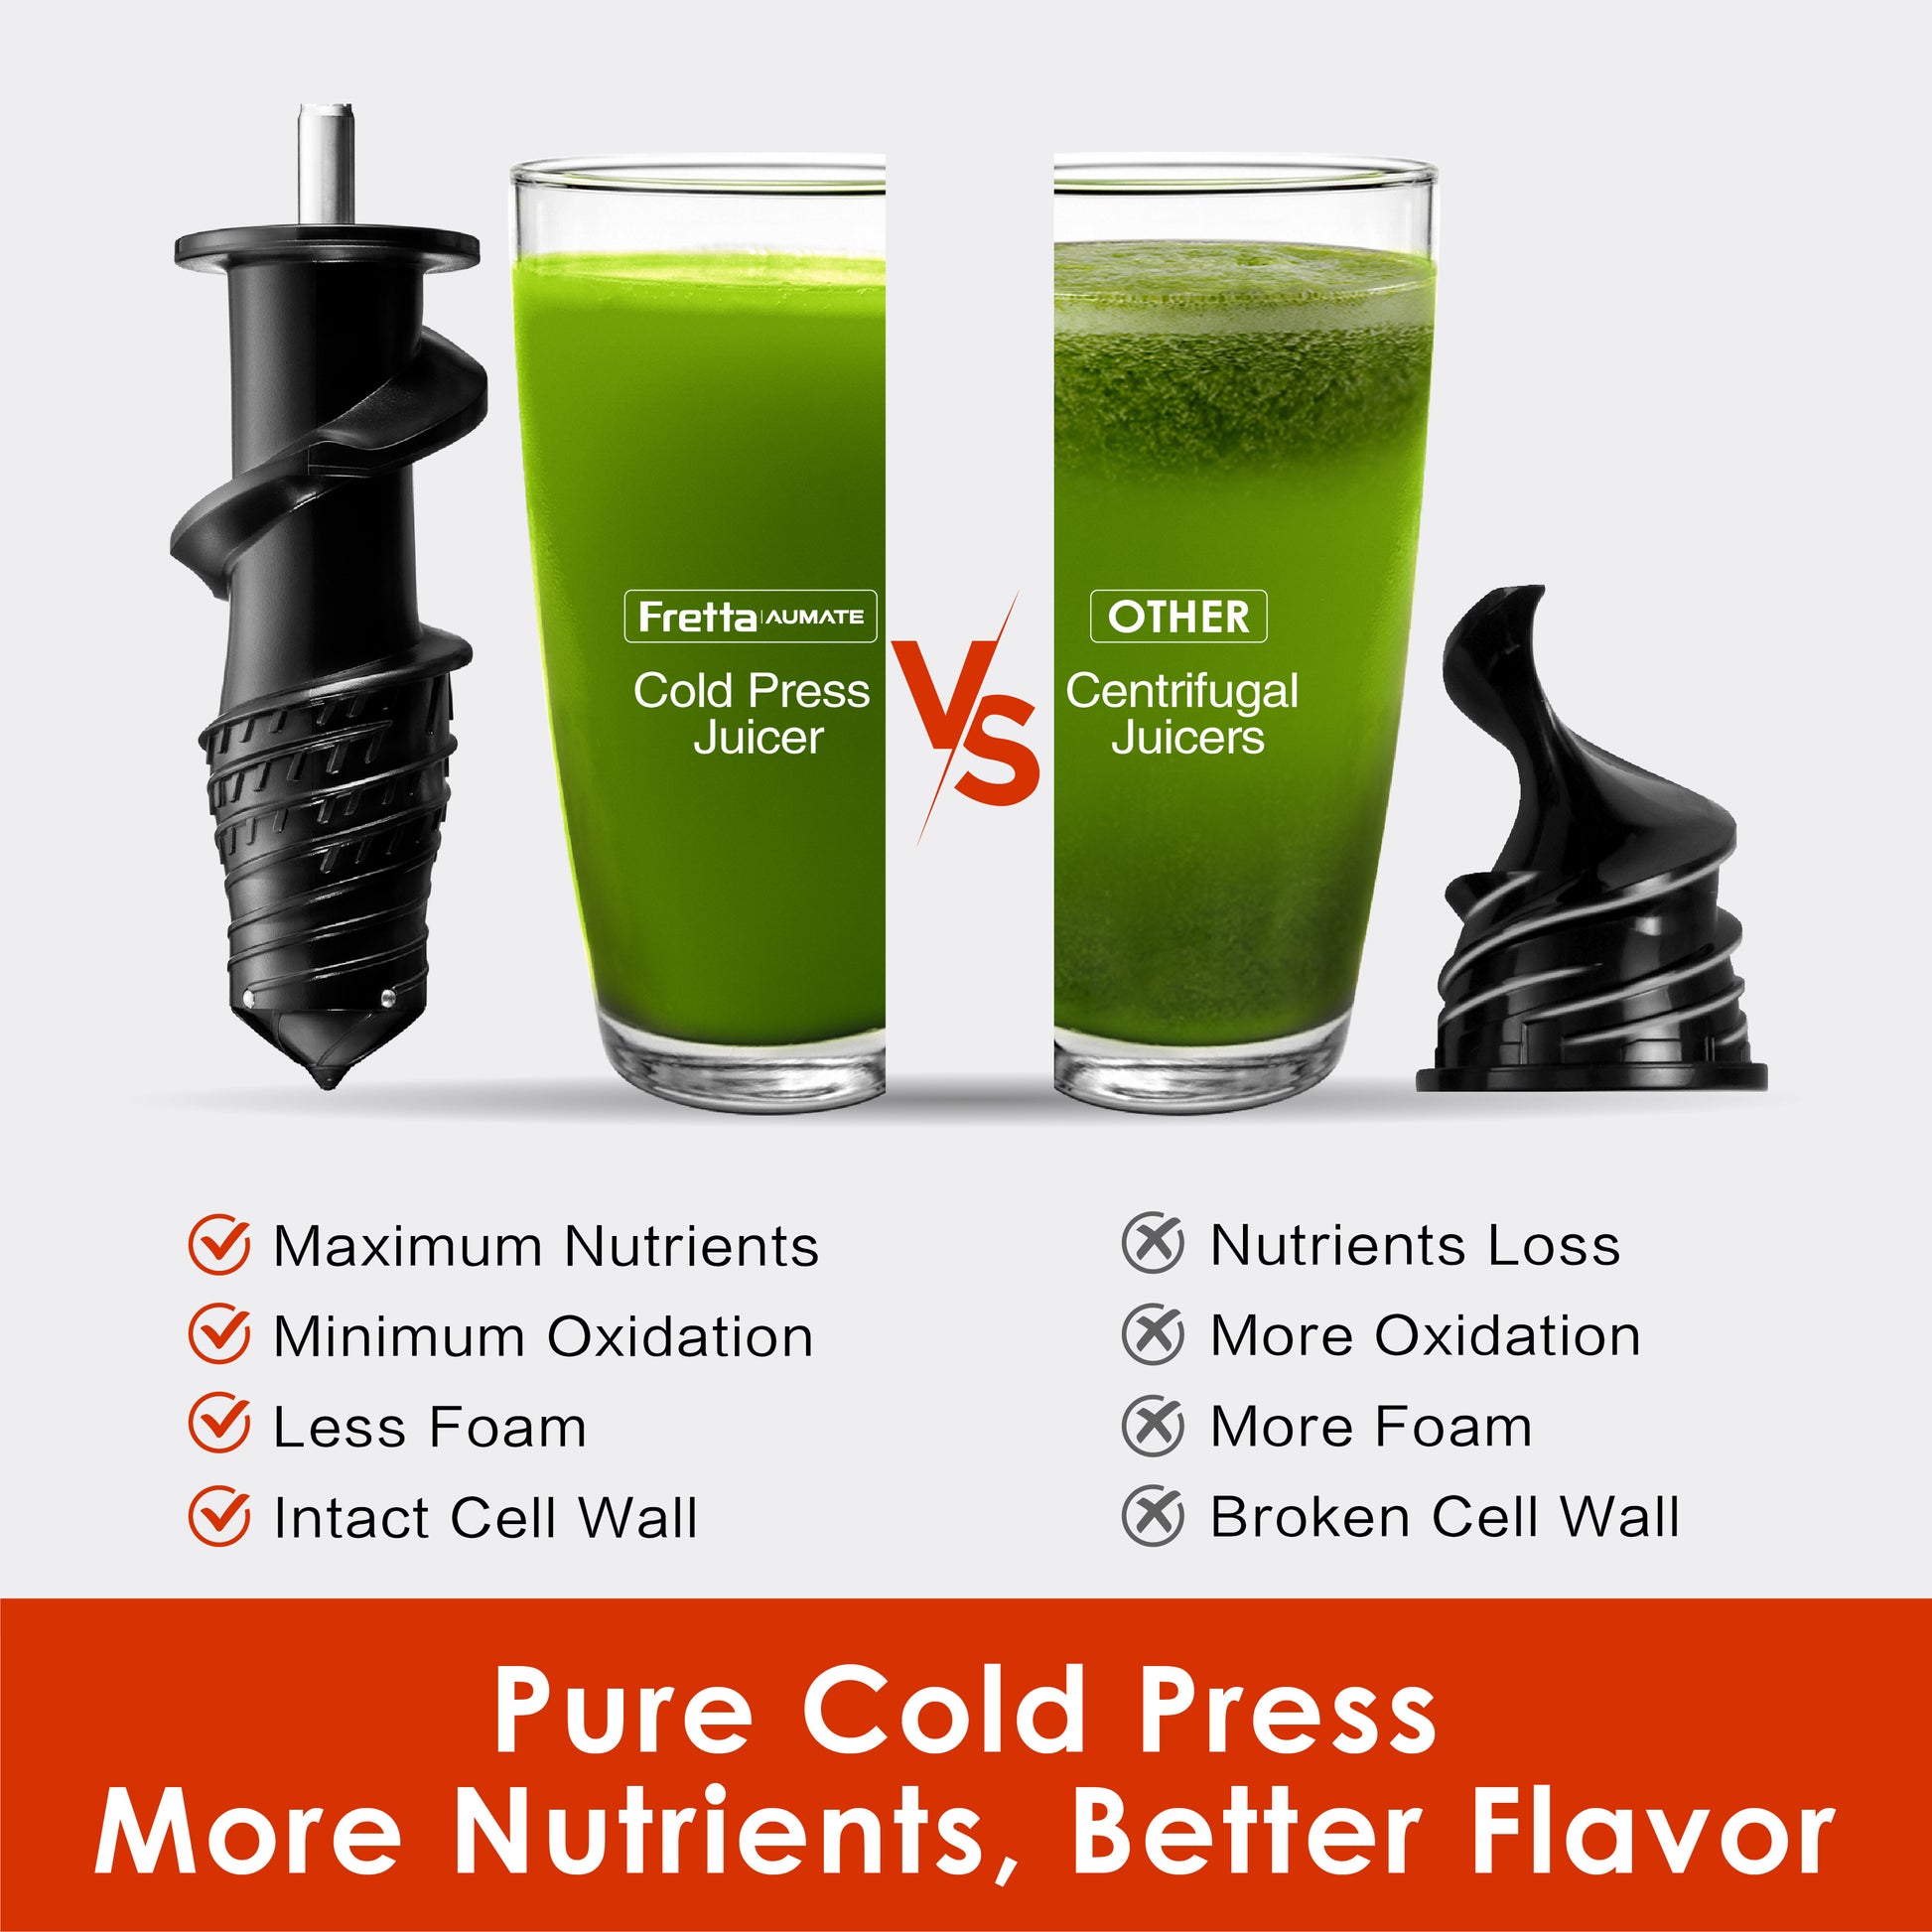 Cold Press Juicers vs Centrifugal Juicers